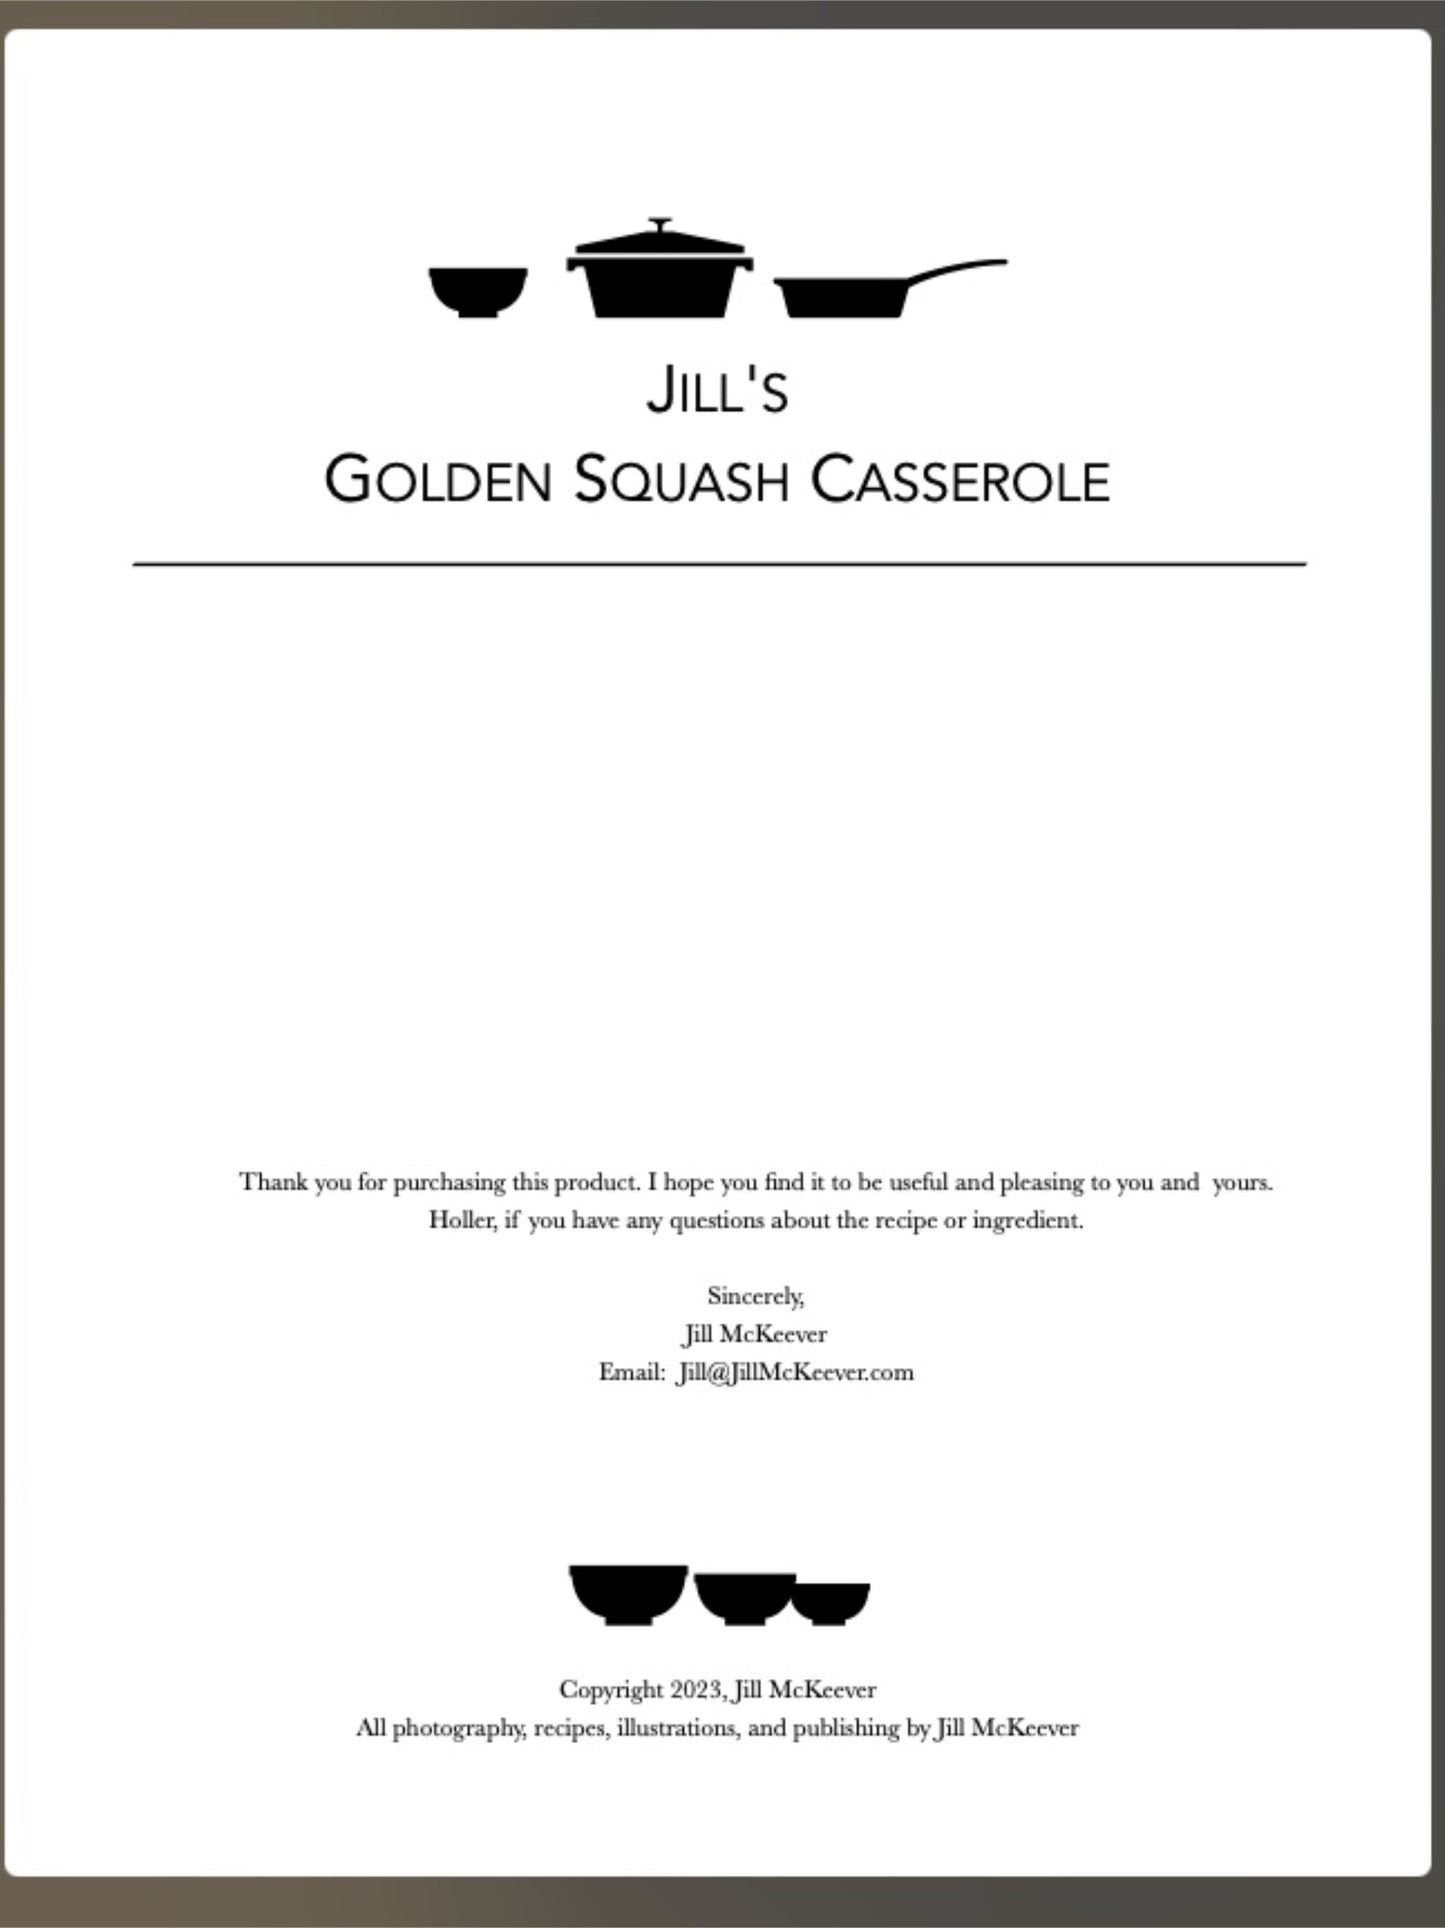 Jill's Golden Squash Casserole Recipe with Patron Support